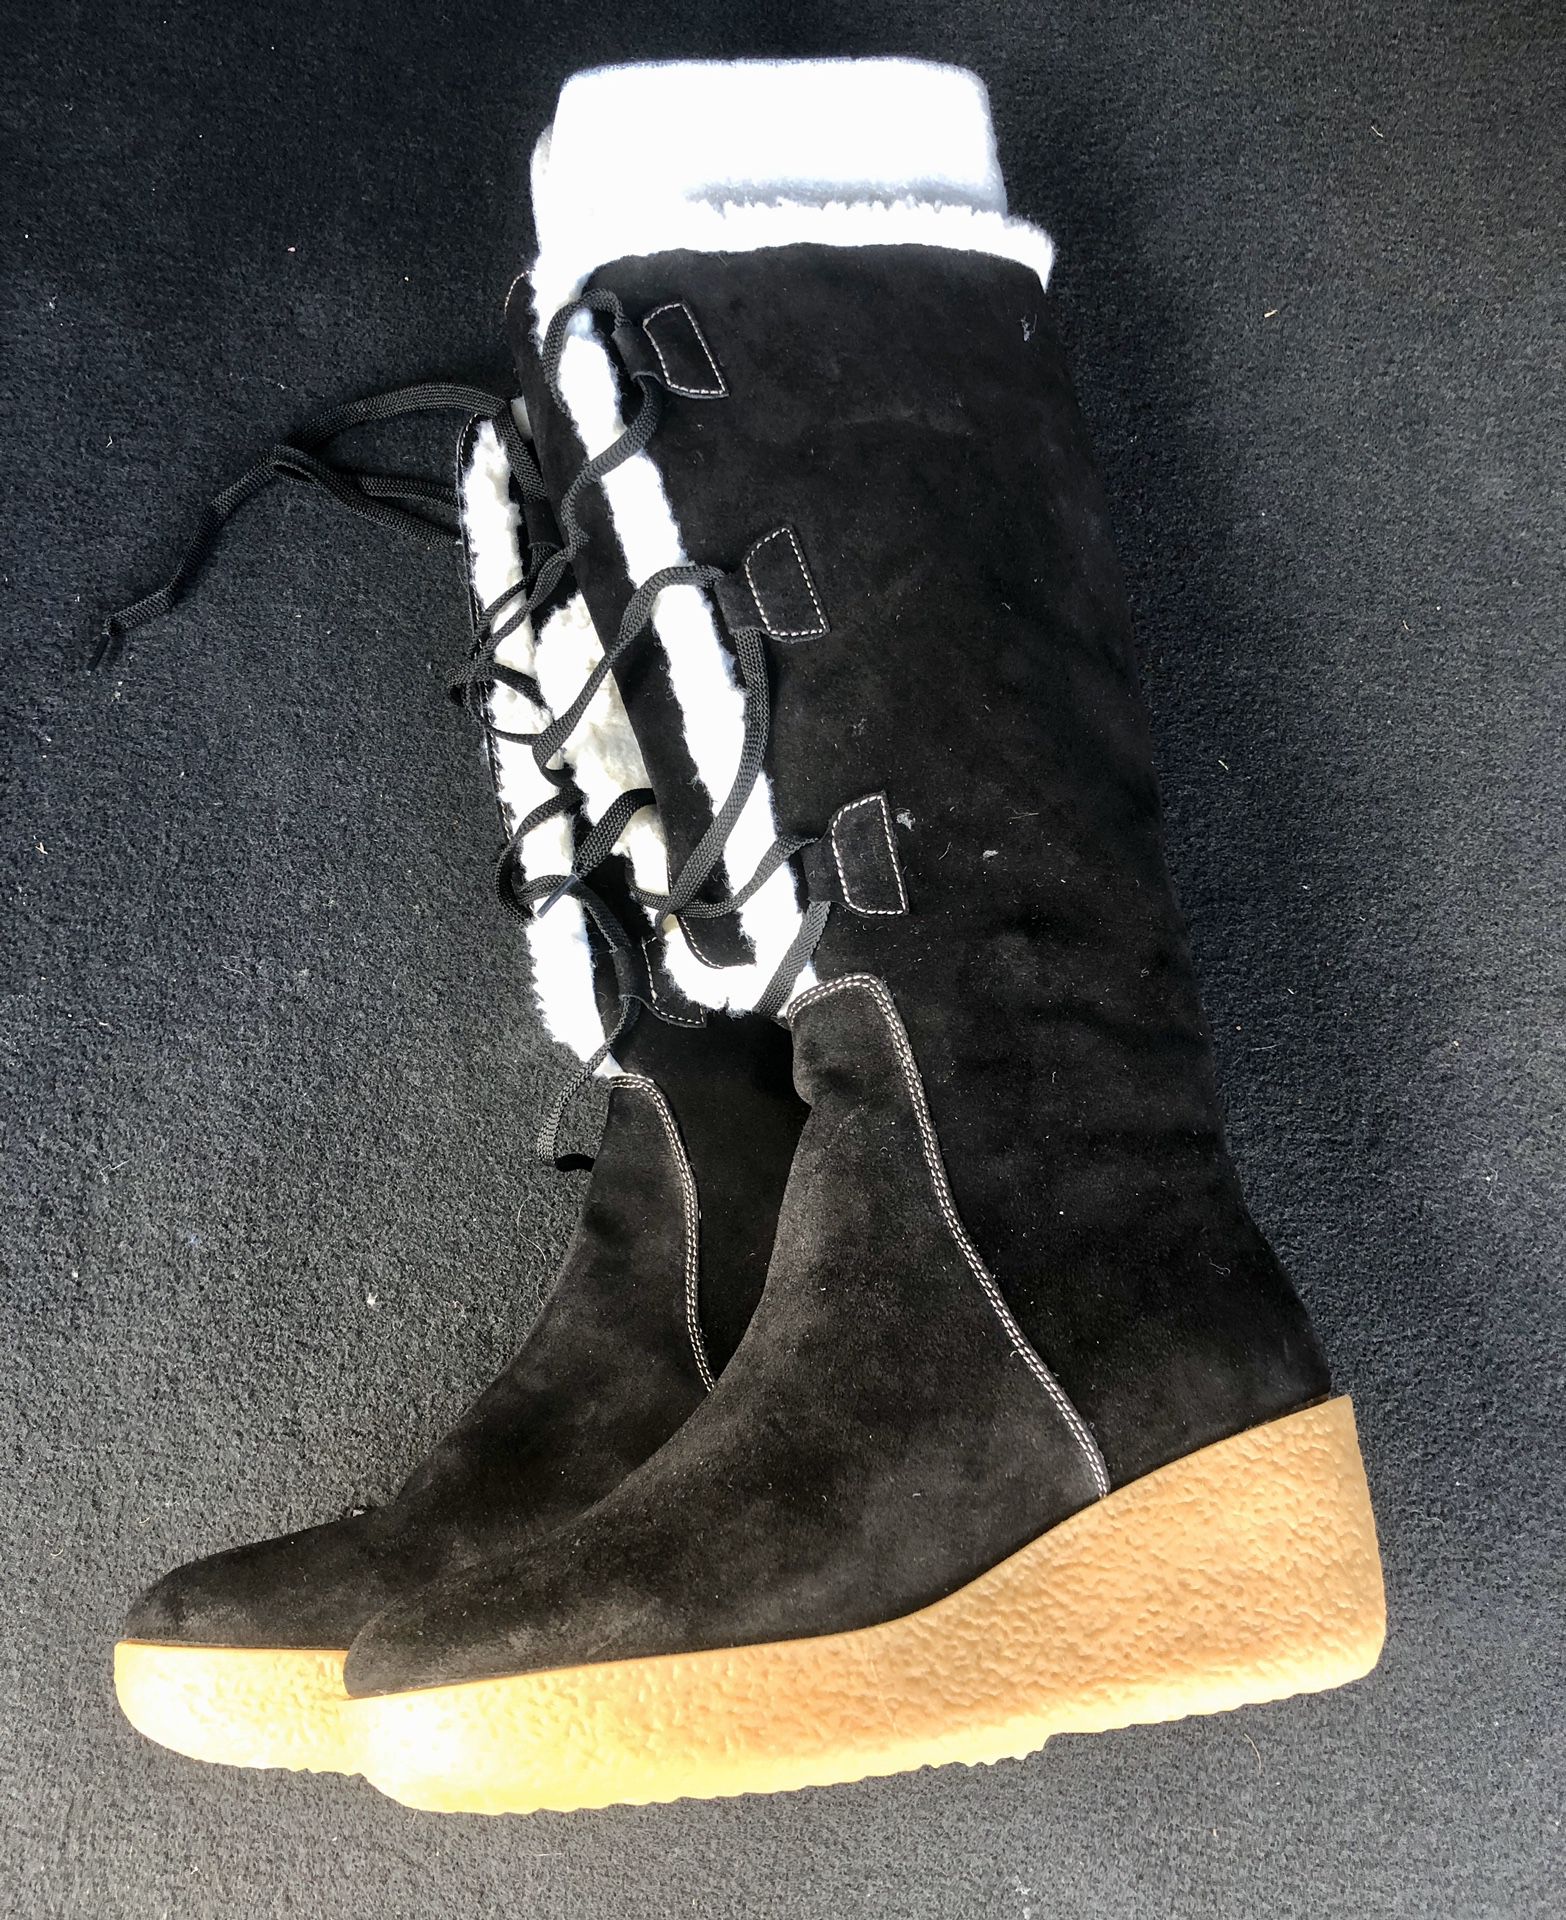 Michael Kors Boots size 10